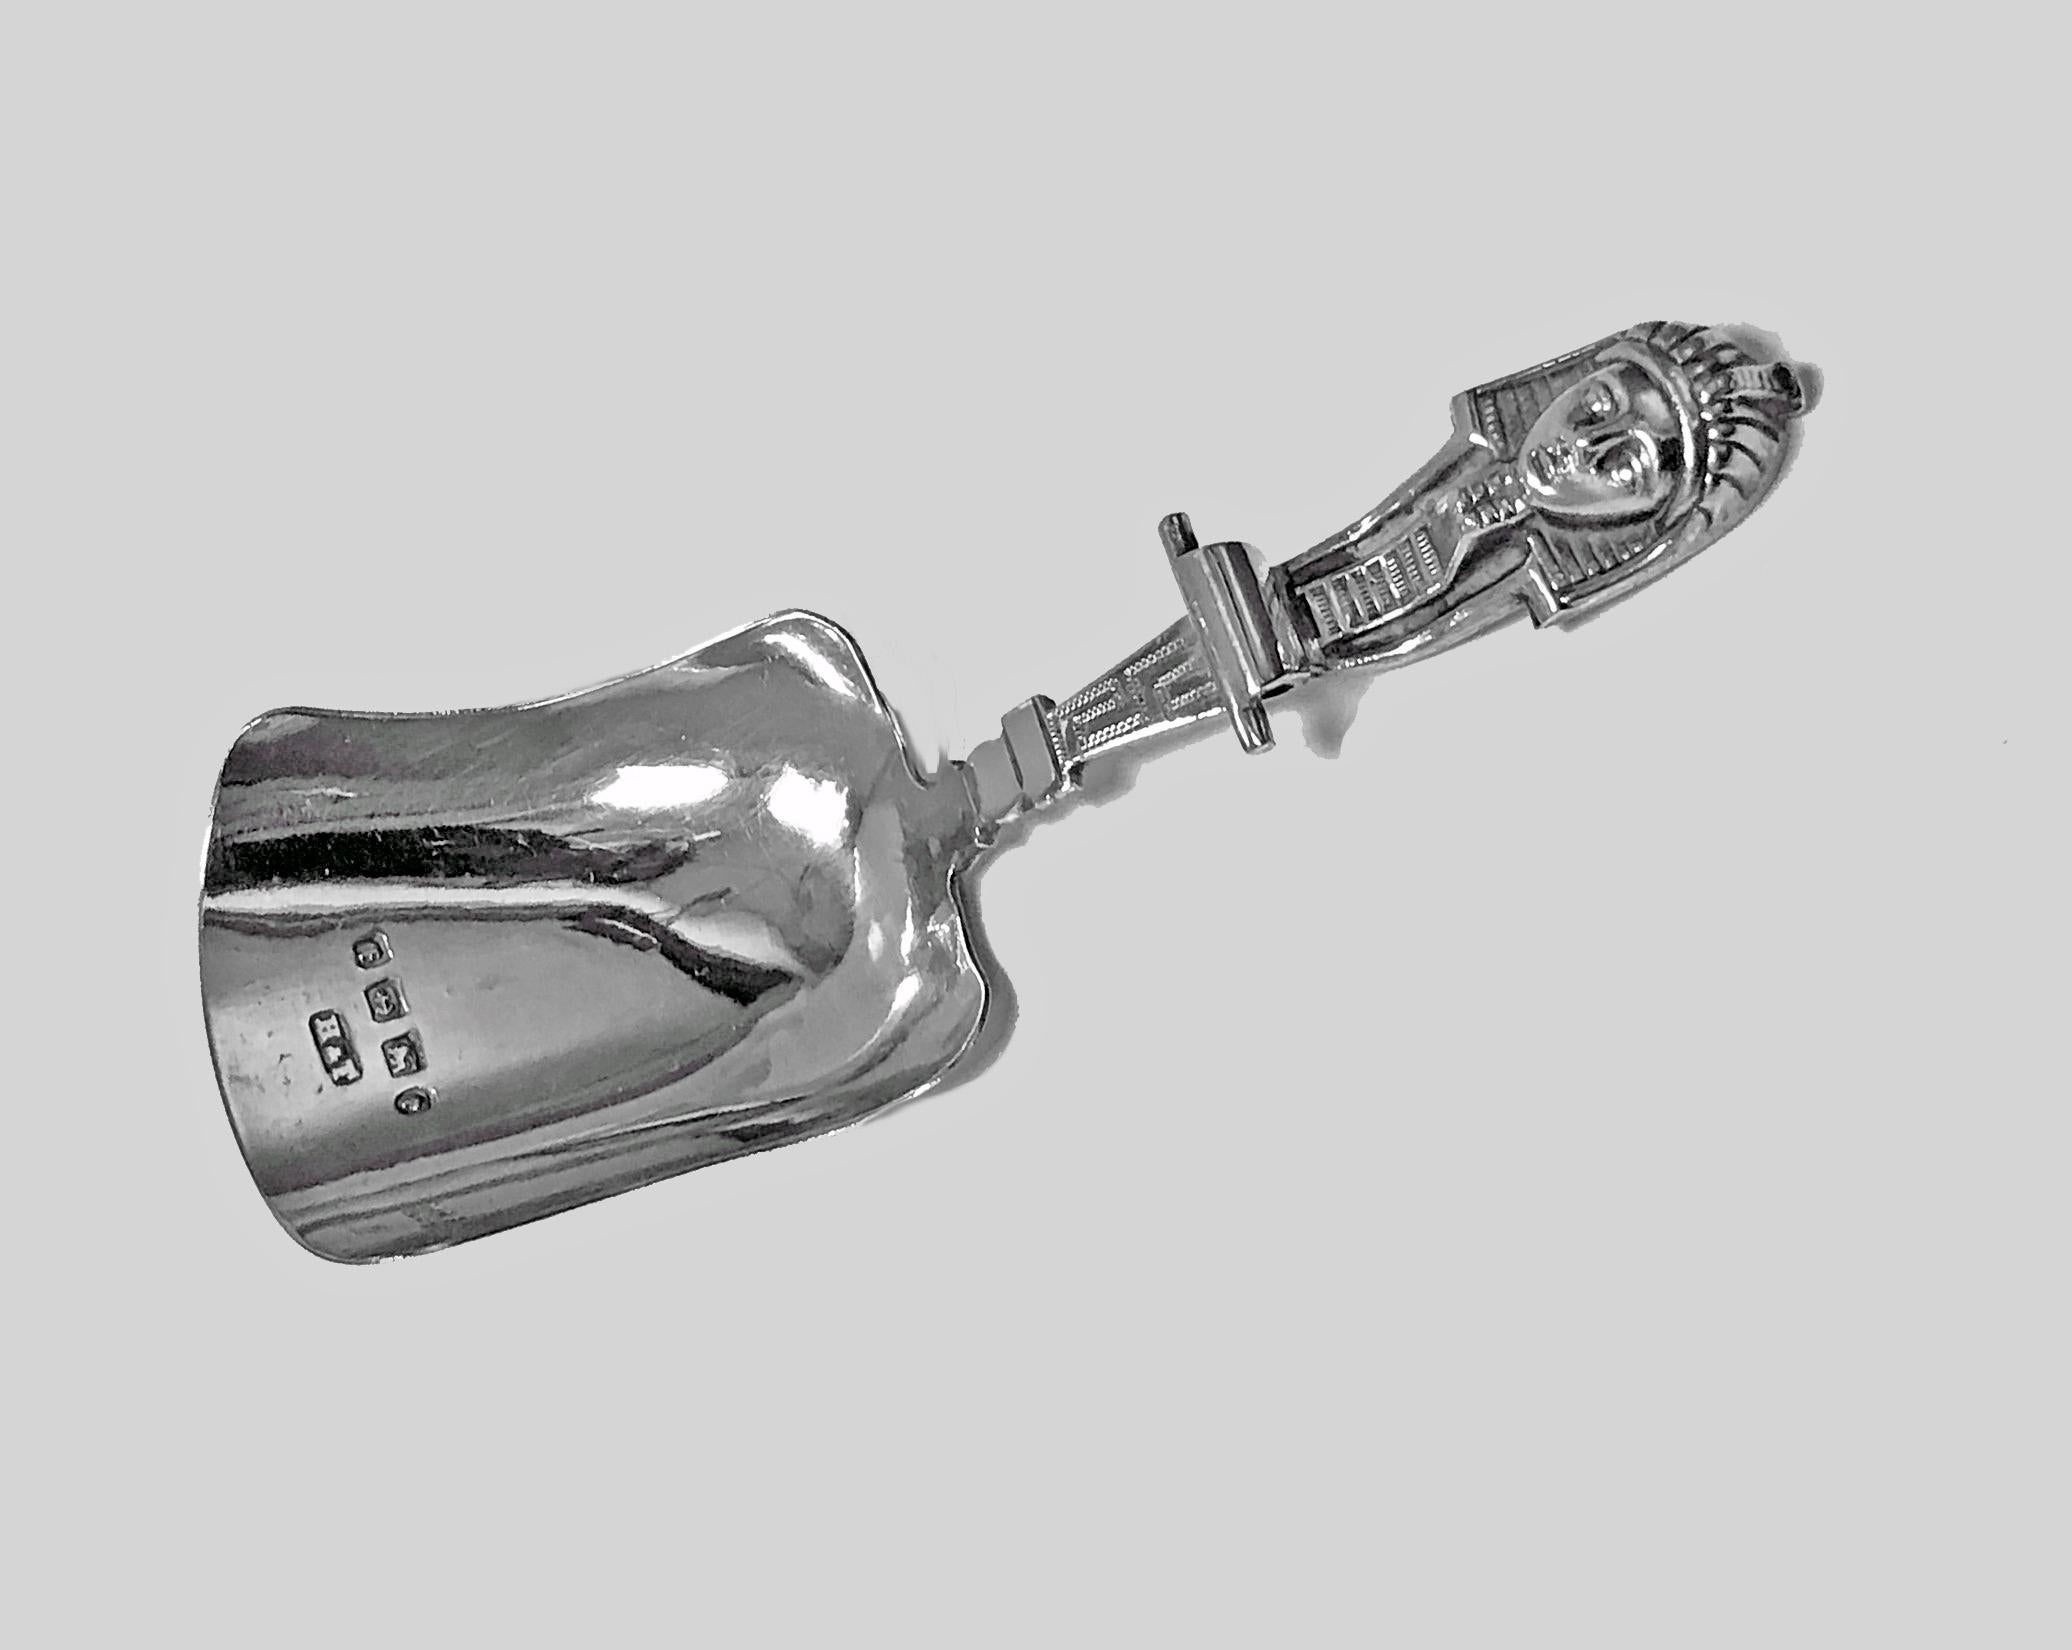 Antique English silver caddy spoon pharaoh head, Birmingham 1880 Hilliard & Thomason. Shovel form with unusual head of a pharaoh. Fully hallmarked. Length: 3.5 inches. Weight: 11 grams.